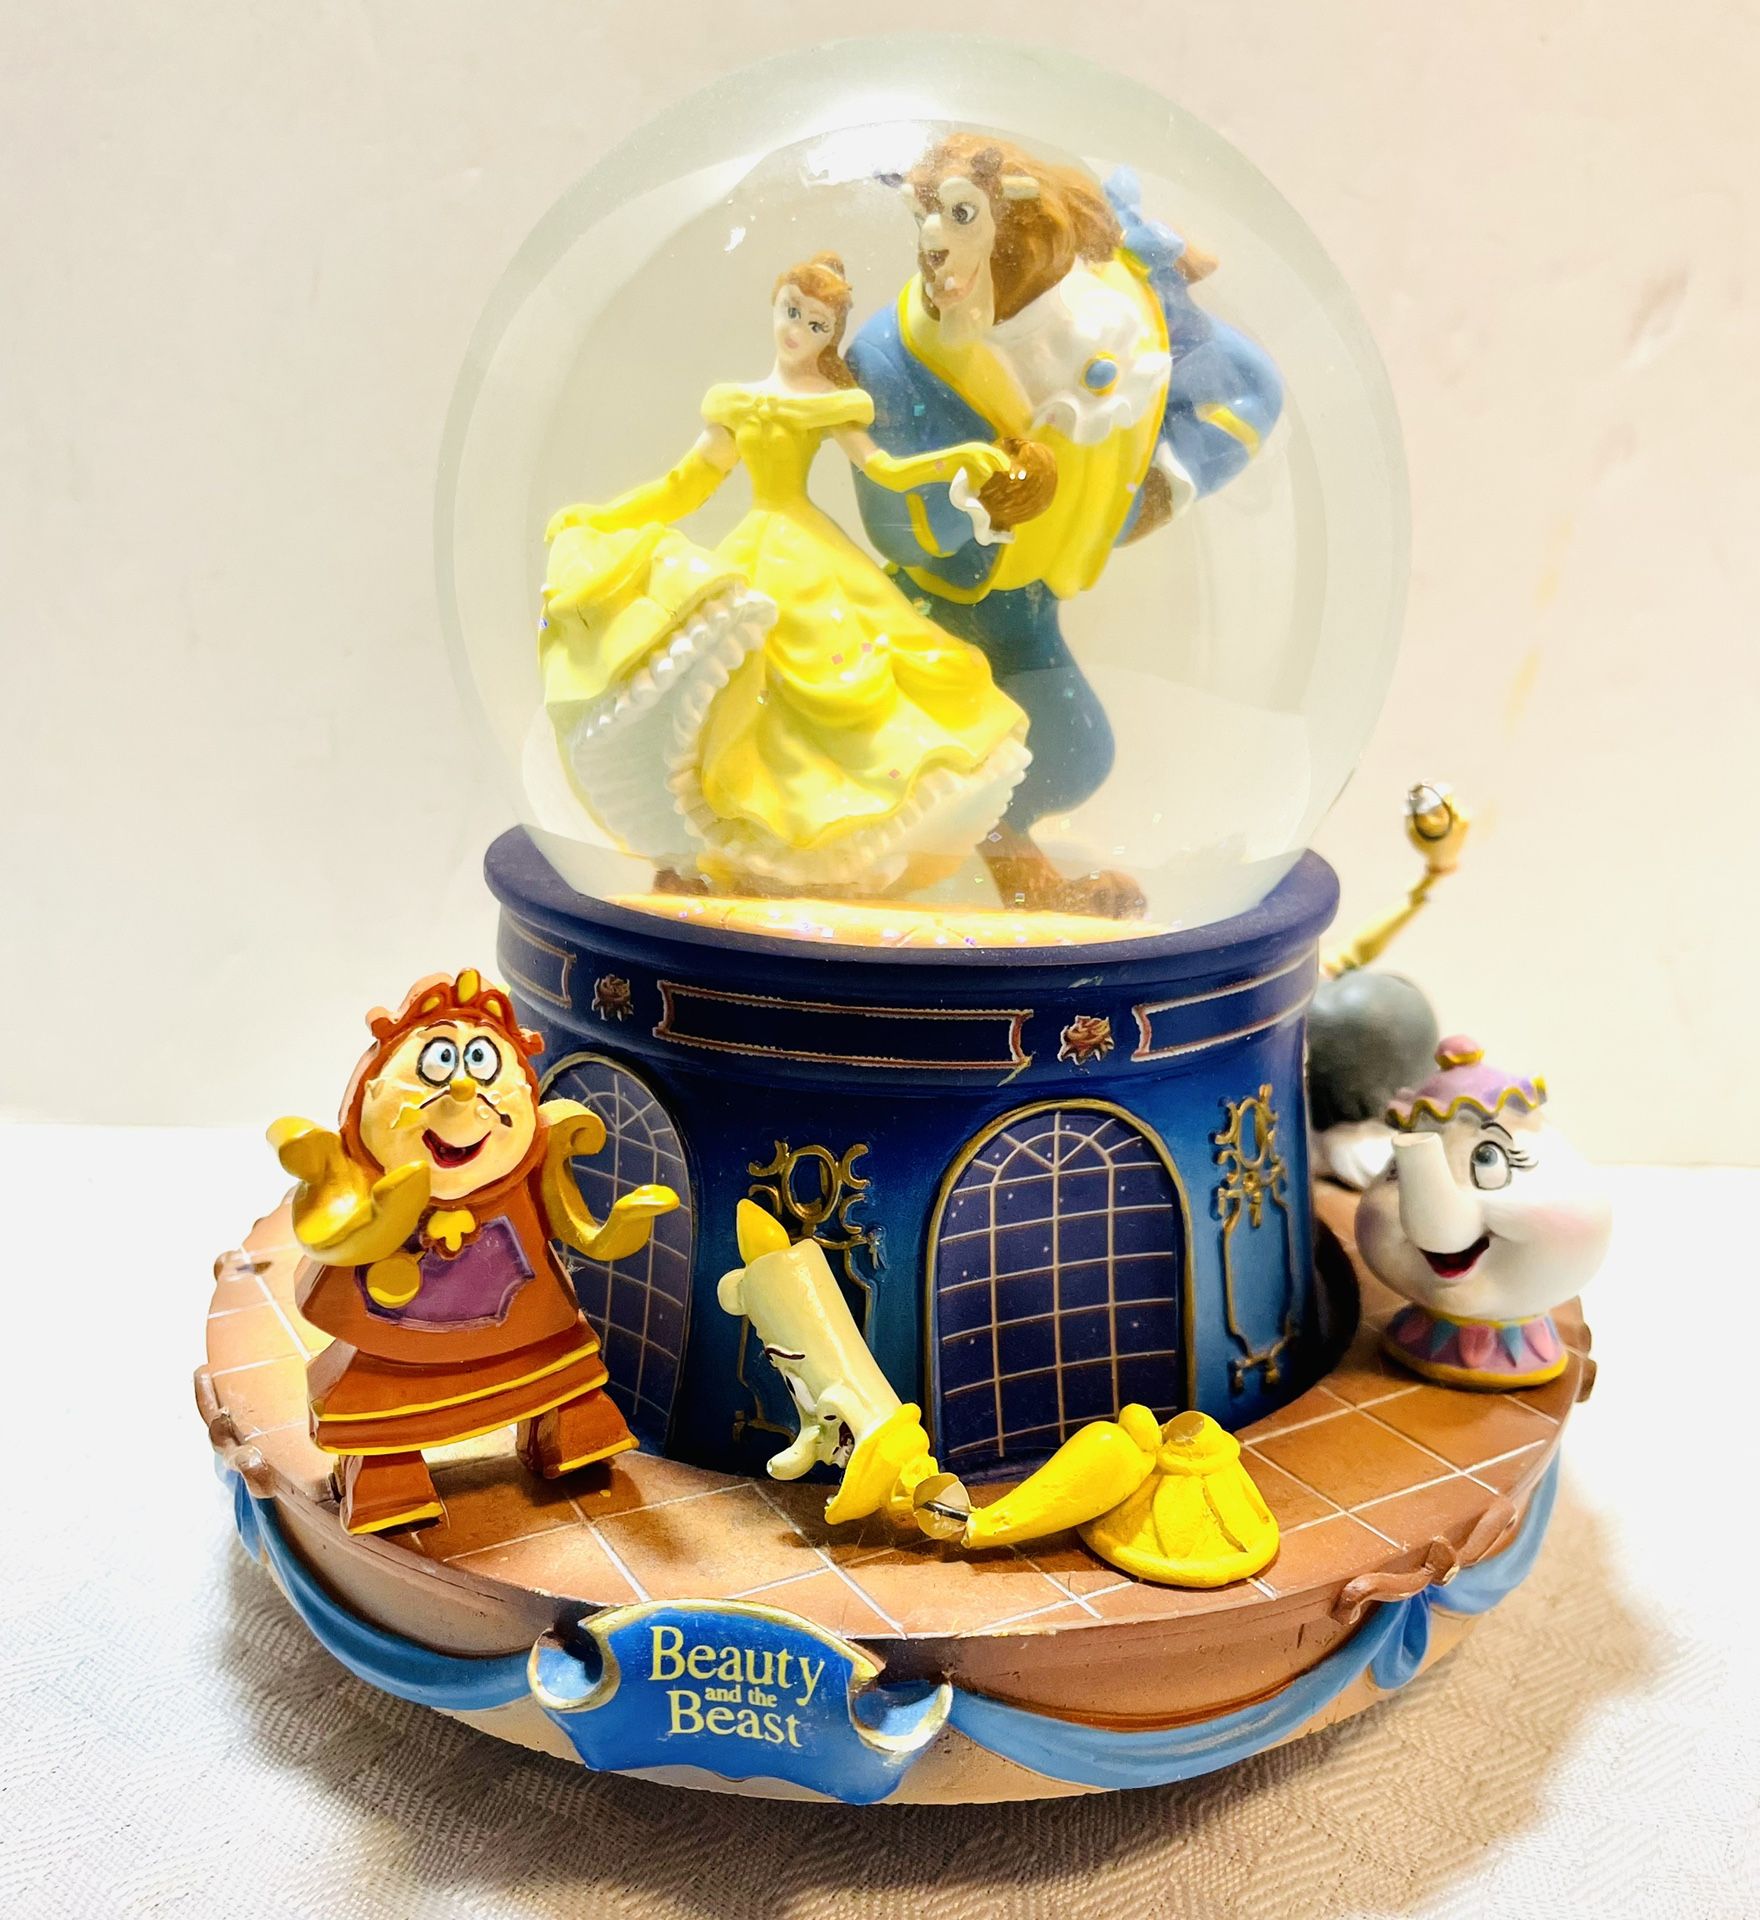 2017 Bradford Exchange Disney Beauty and the Beast Rotating Musical Glitter Globe